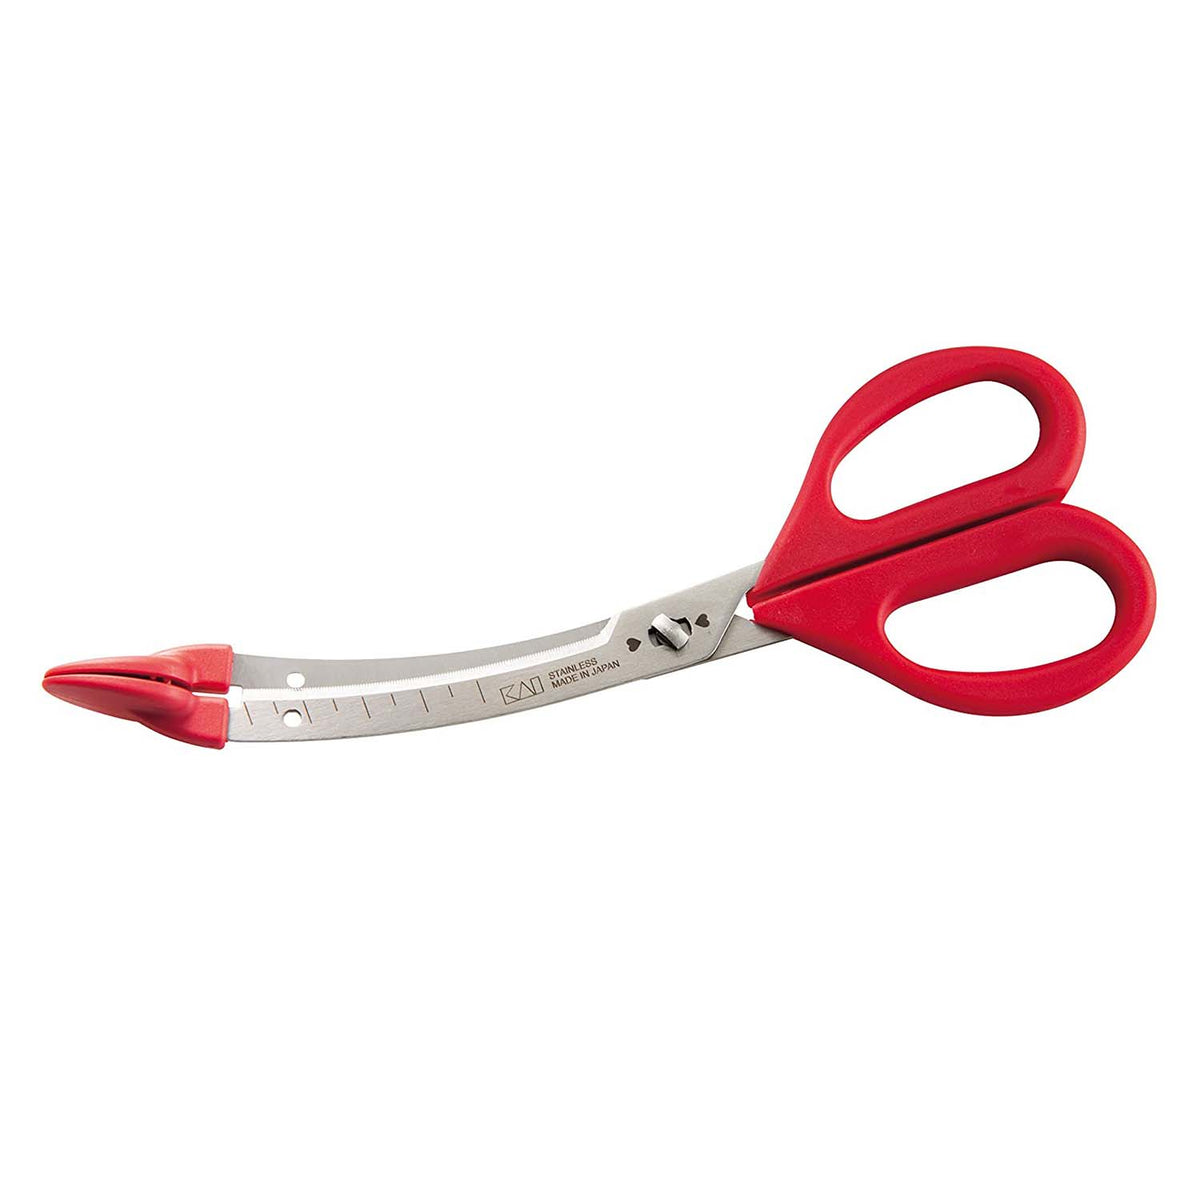 Kai Stainless Steel Kitchen Scissors with Tongs